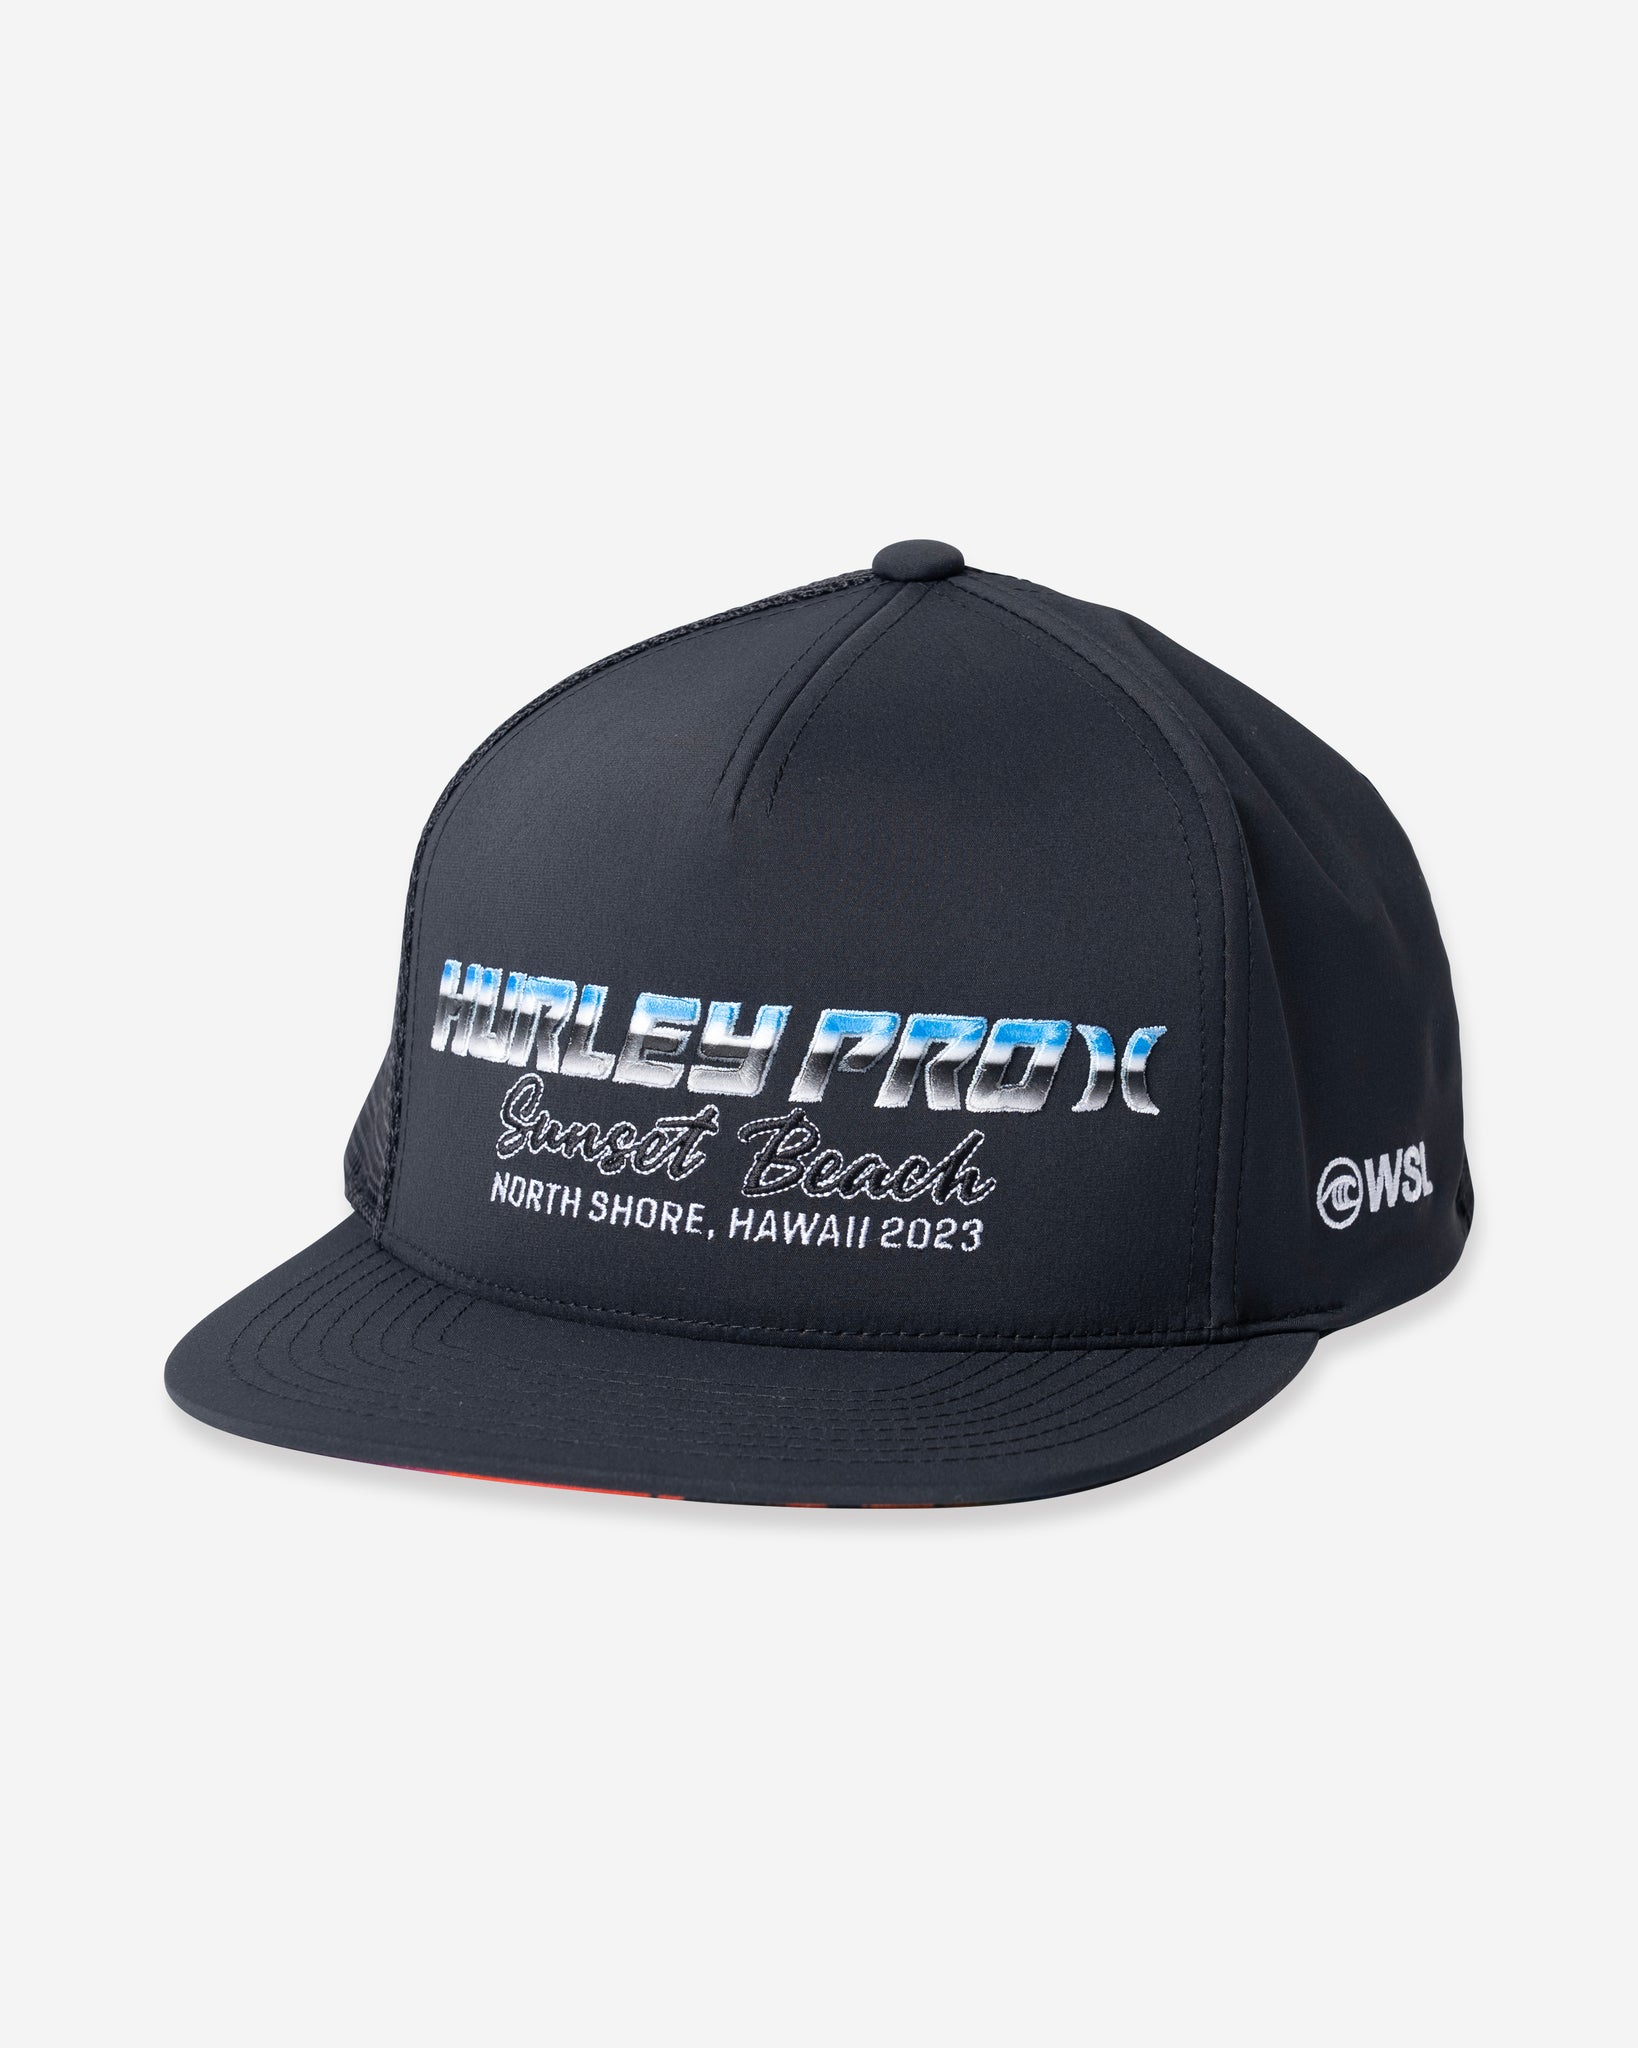 MENS HURLEY PRO SUNSET BEACH CAP メンズ/キャップ